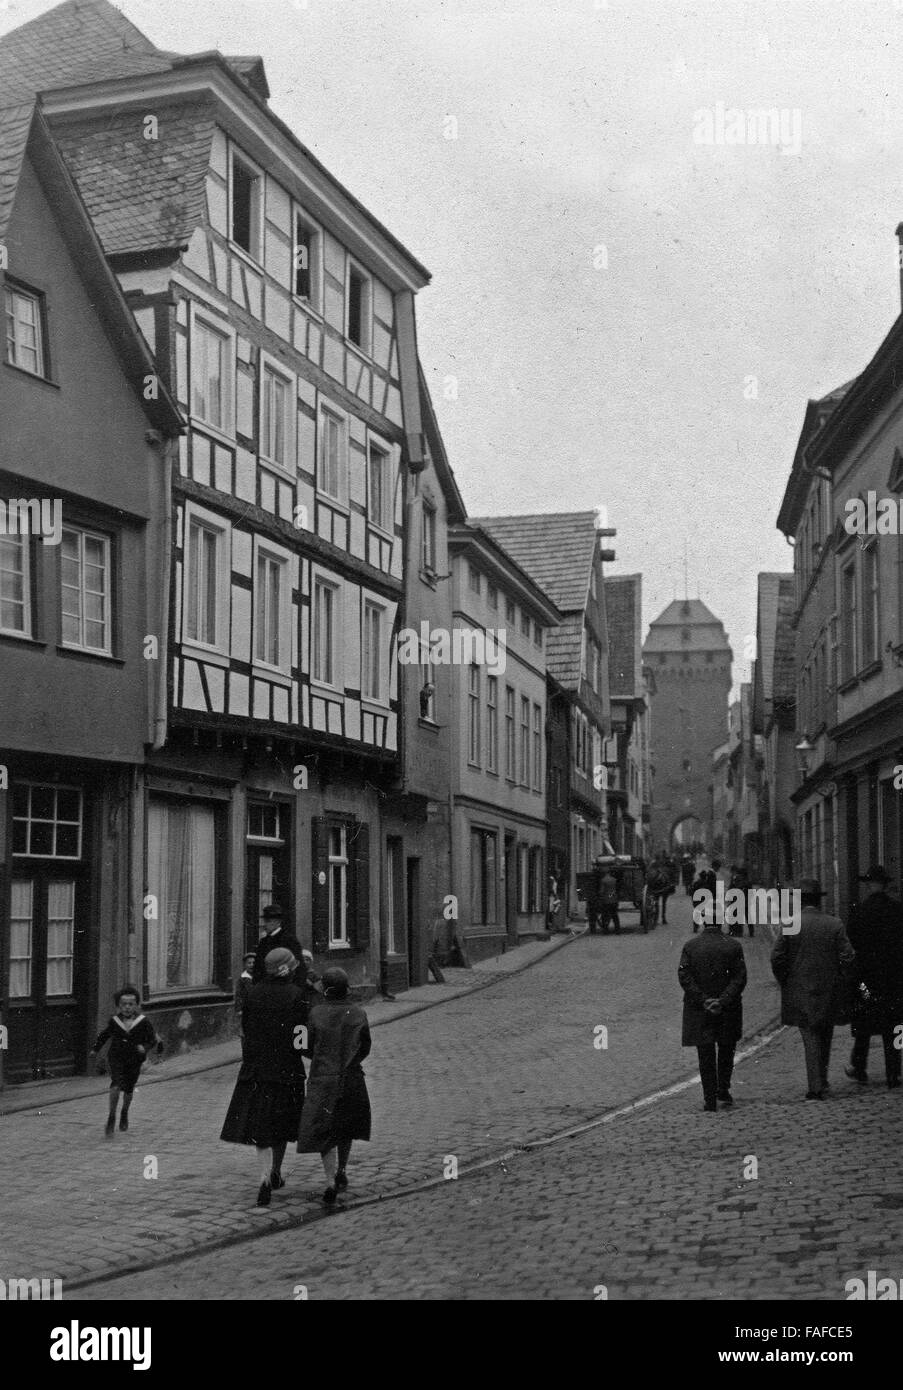 Menschen in den Straßen von Linz am Rhein, Deutschland 1920er Jahre. Les gens dans les rues de Linz le Rhin, l'Allemagne des années 20. Banque D'Images